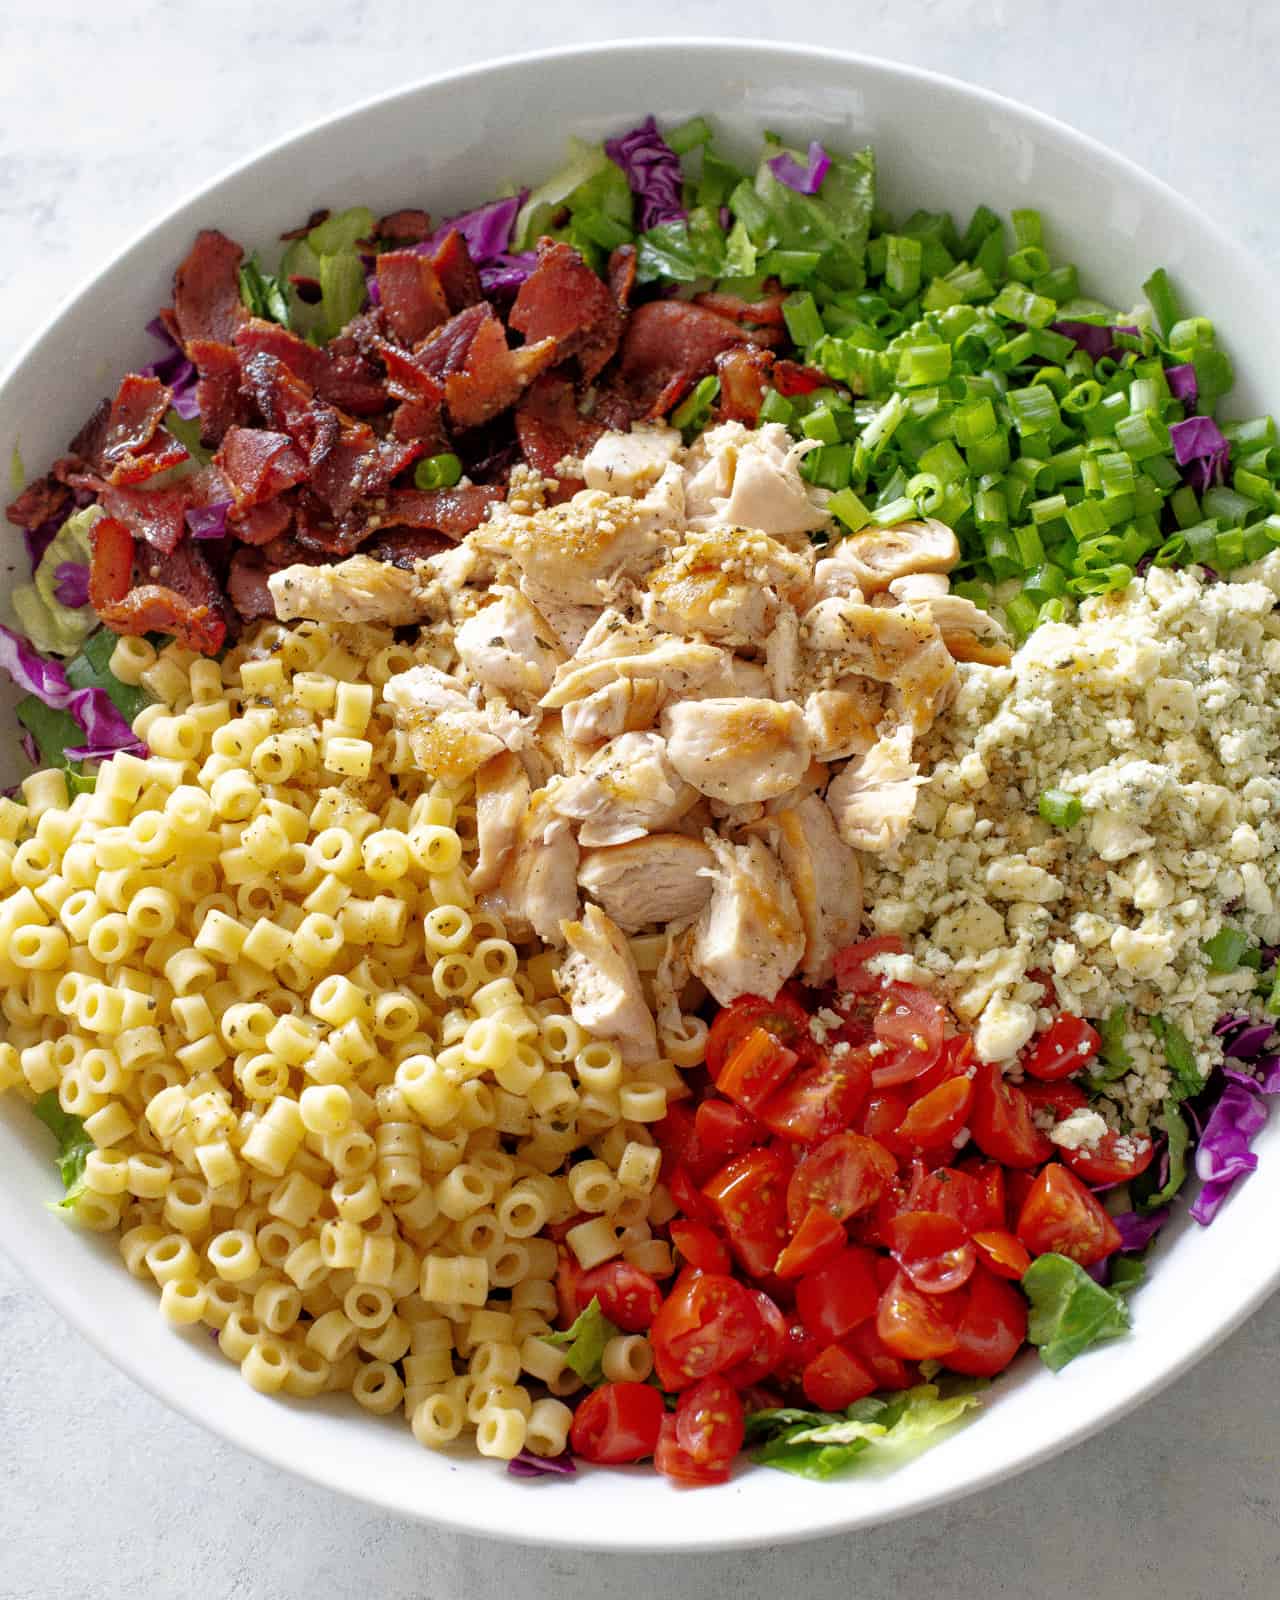 Homemade Portillos Chopped Salad Recipe - Bonappeteach